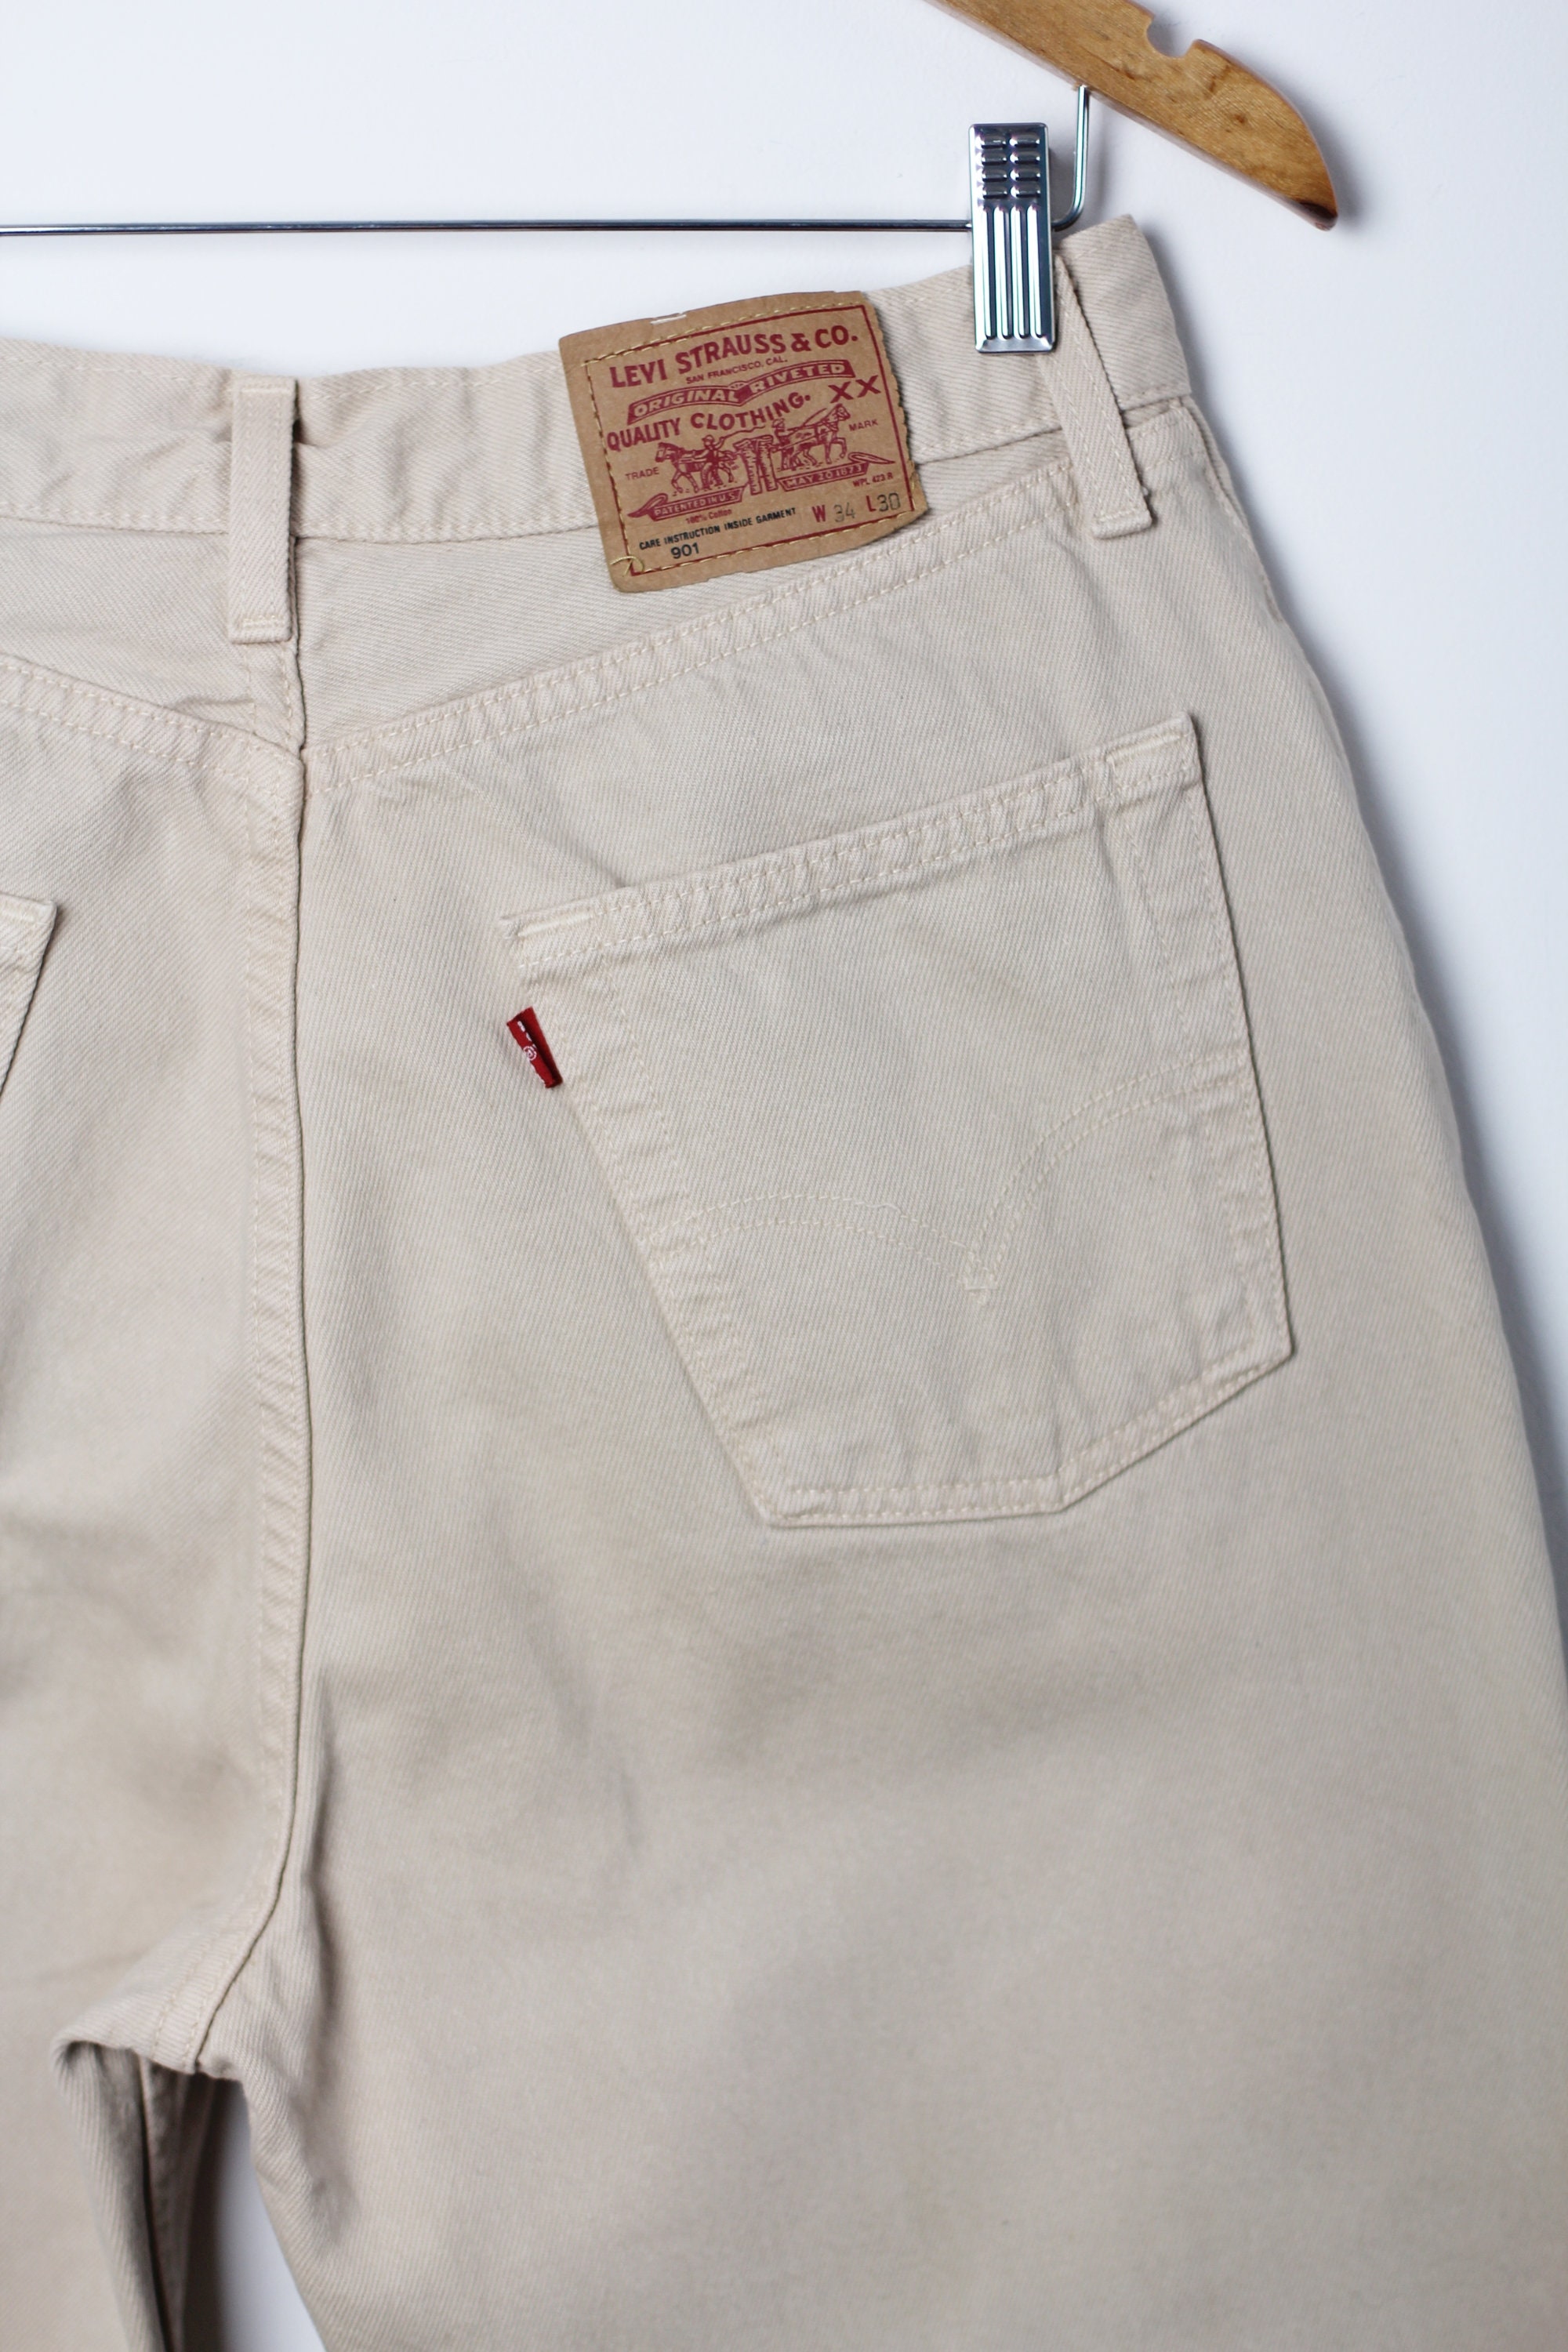 LEVI'S 901 Jeans Size 32 Vintage Beige Denim Pants in | Etsy